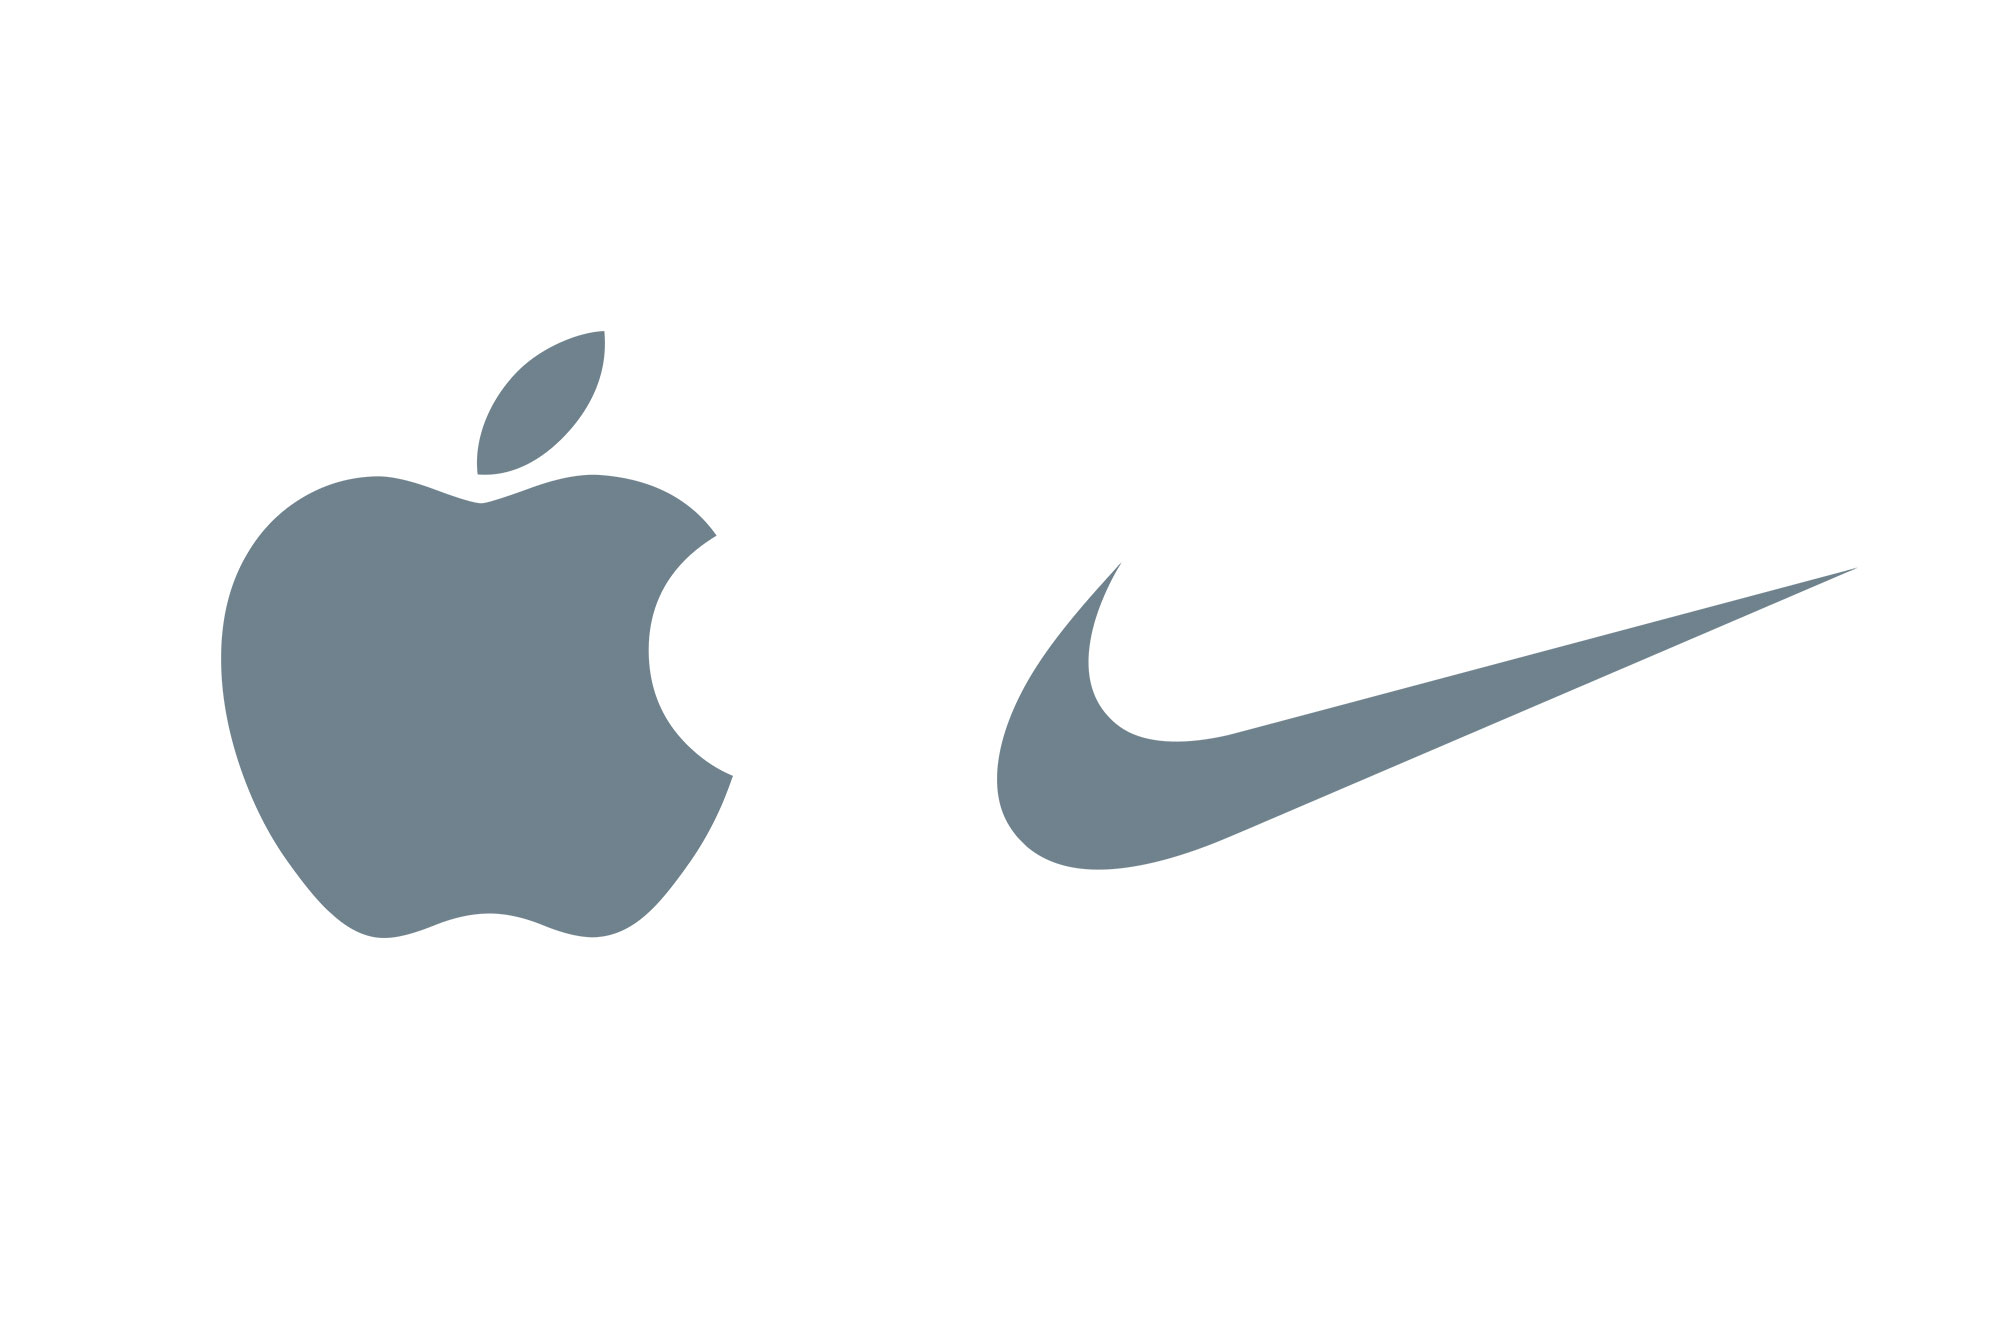 Apple and Nike Logos